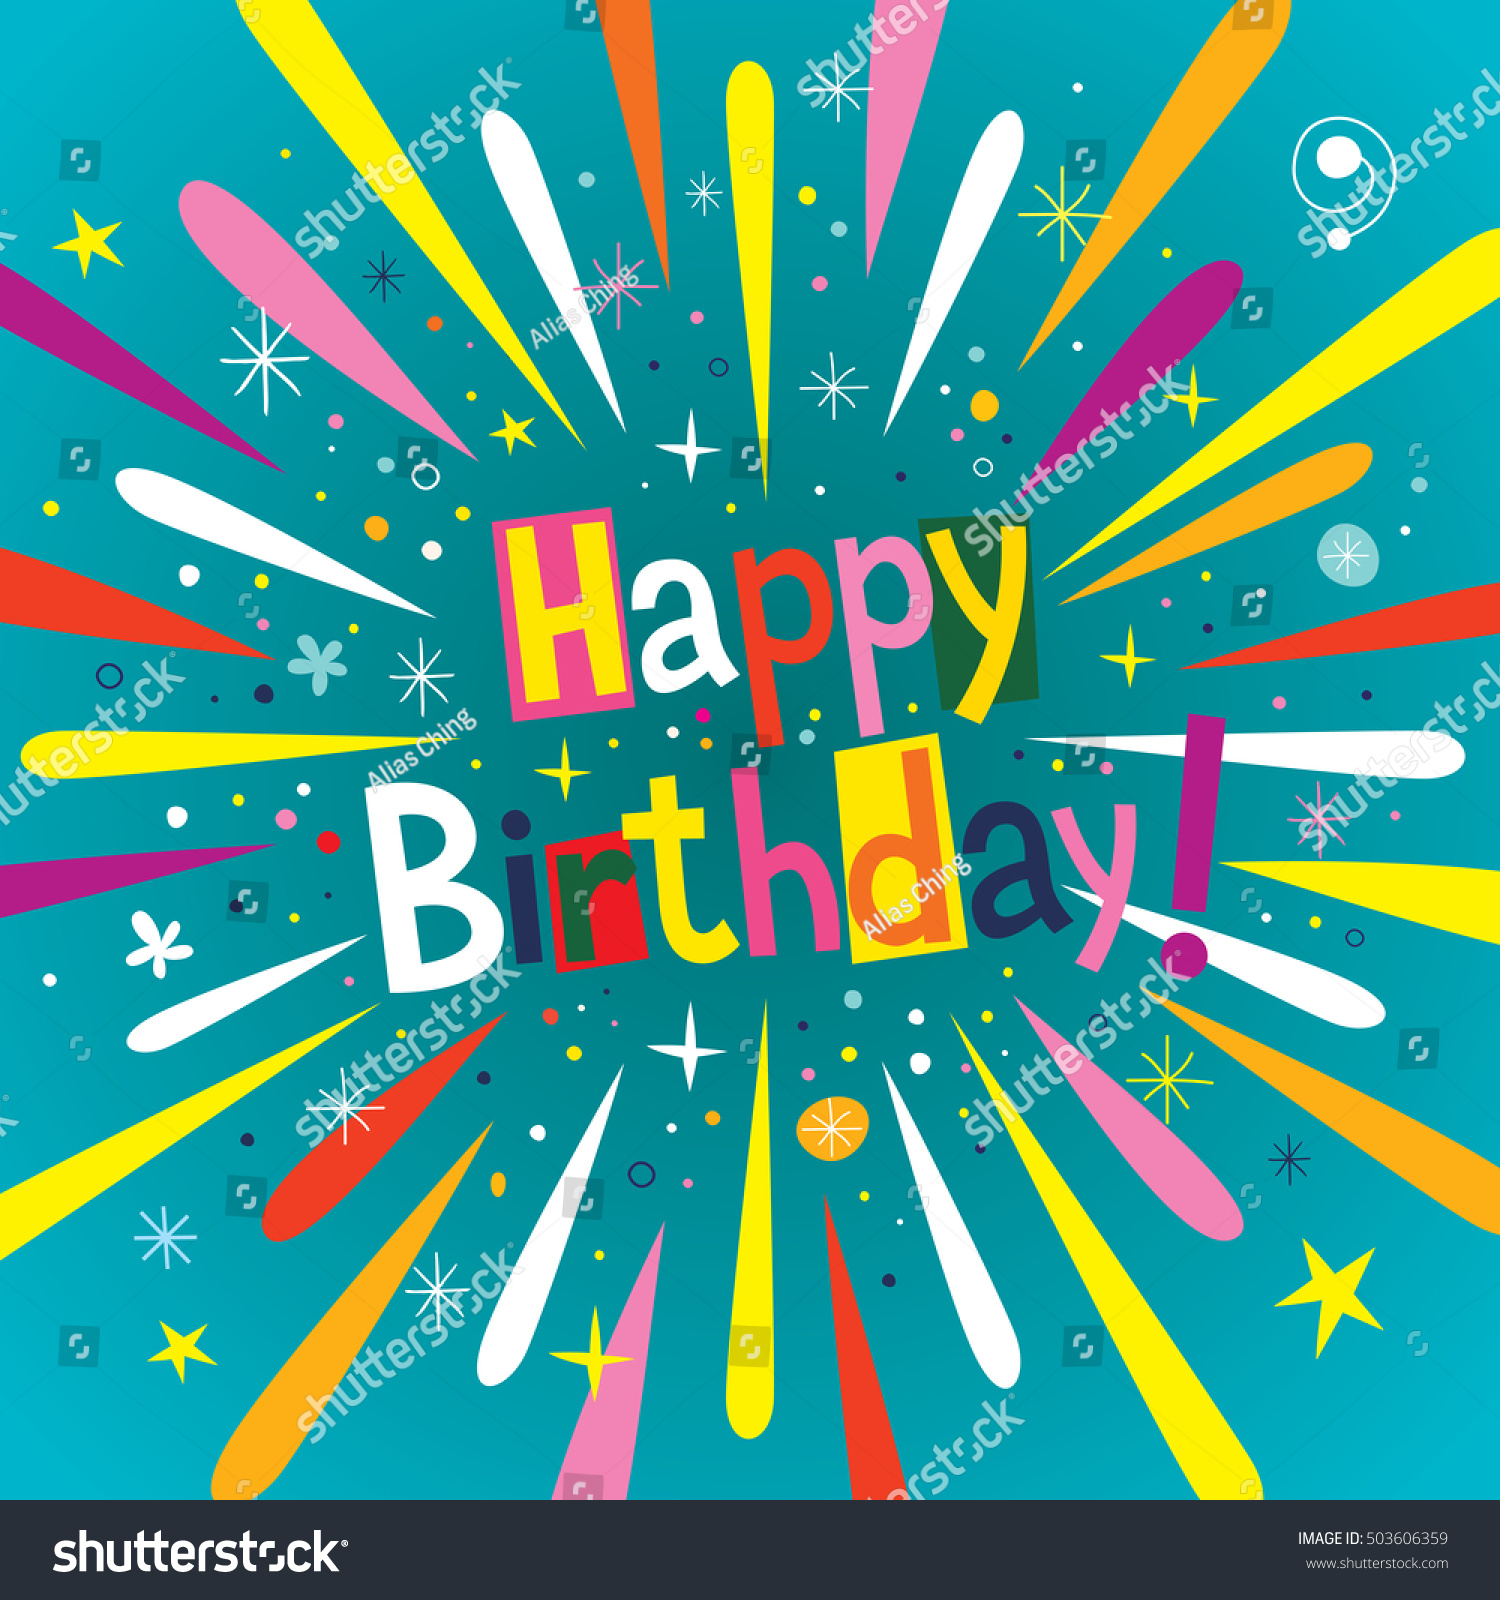 Happy Birthday Burst Explosion Celebration Greeting Stock Vector ...